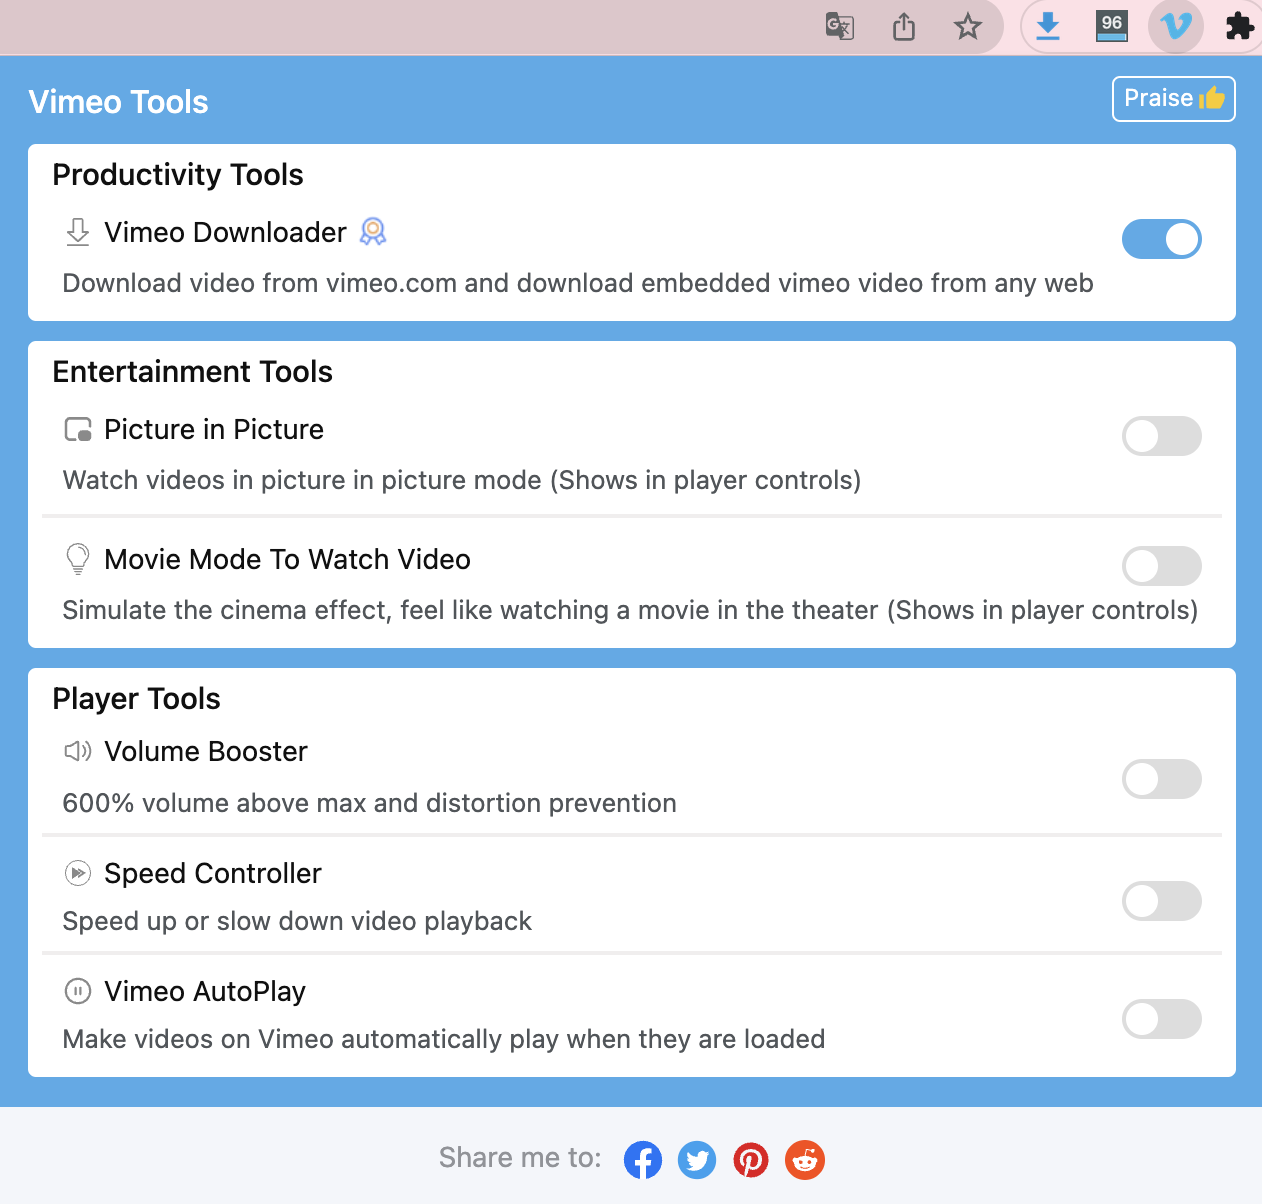 Vimeo Tools - Improve Experience